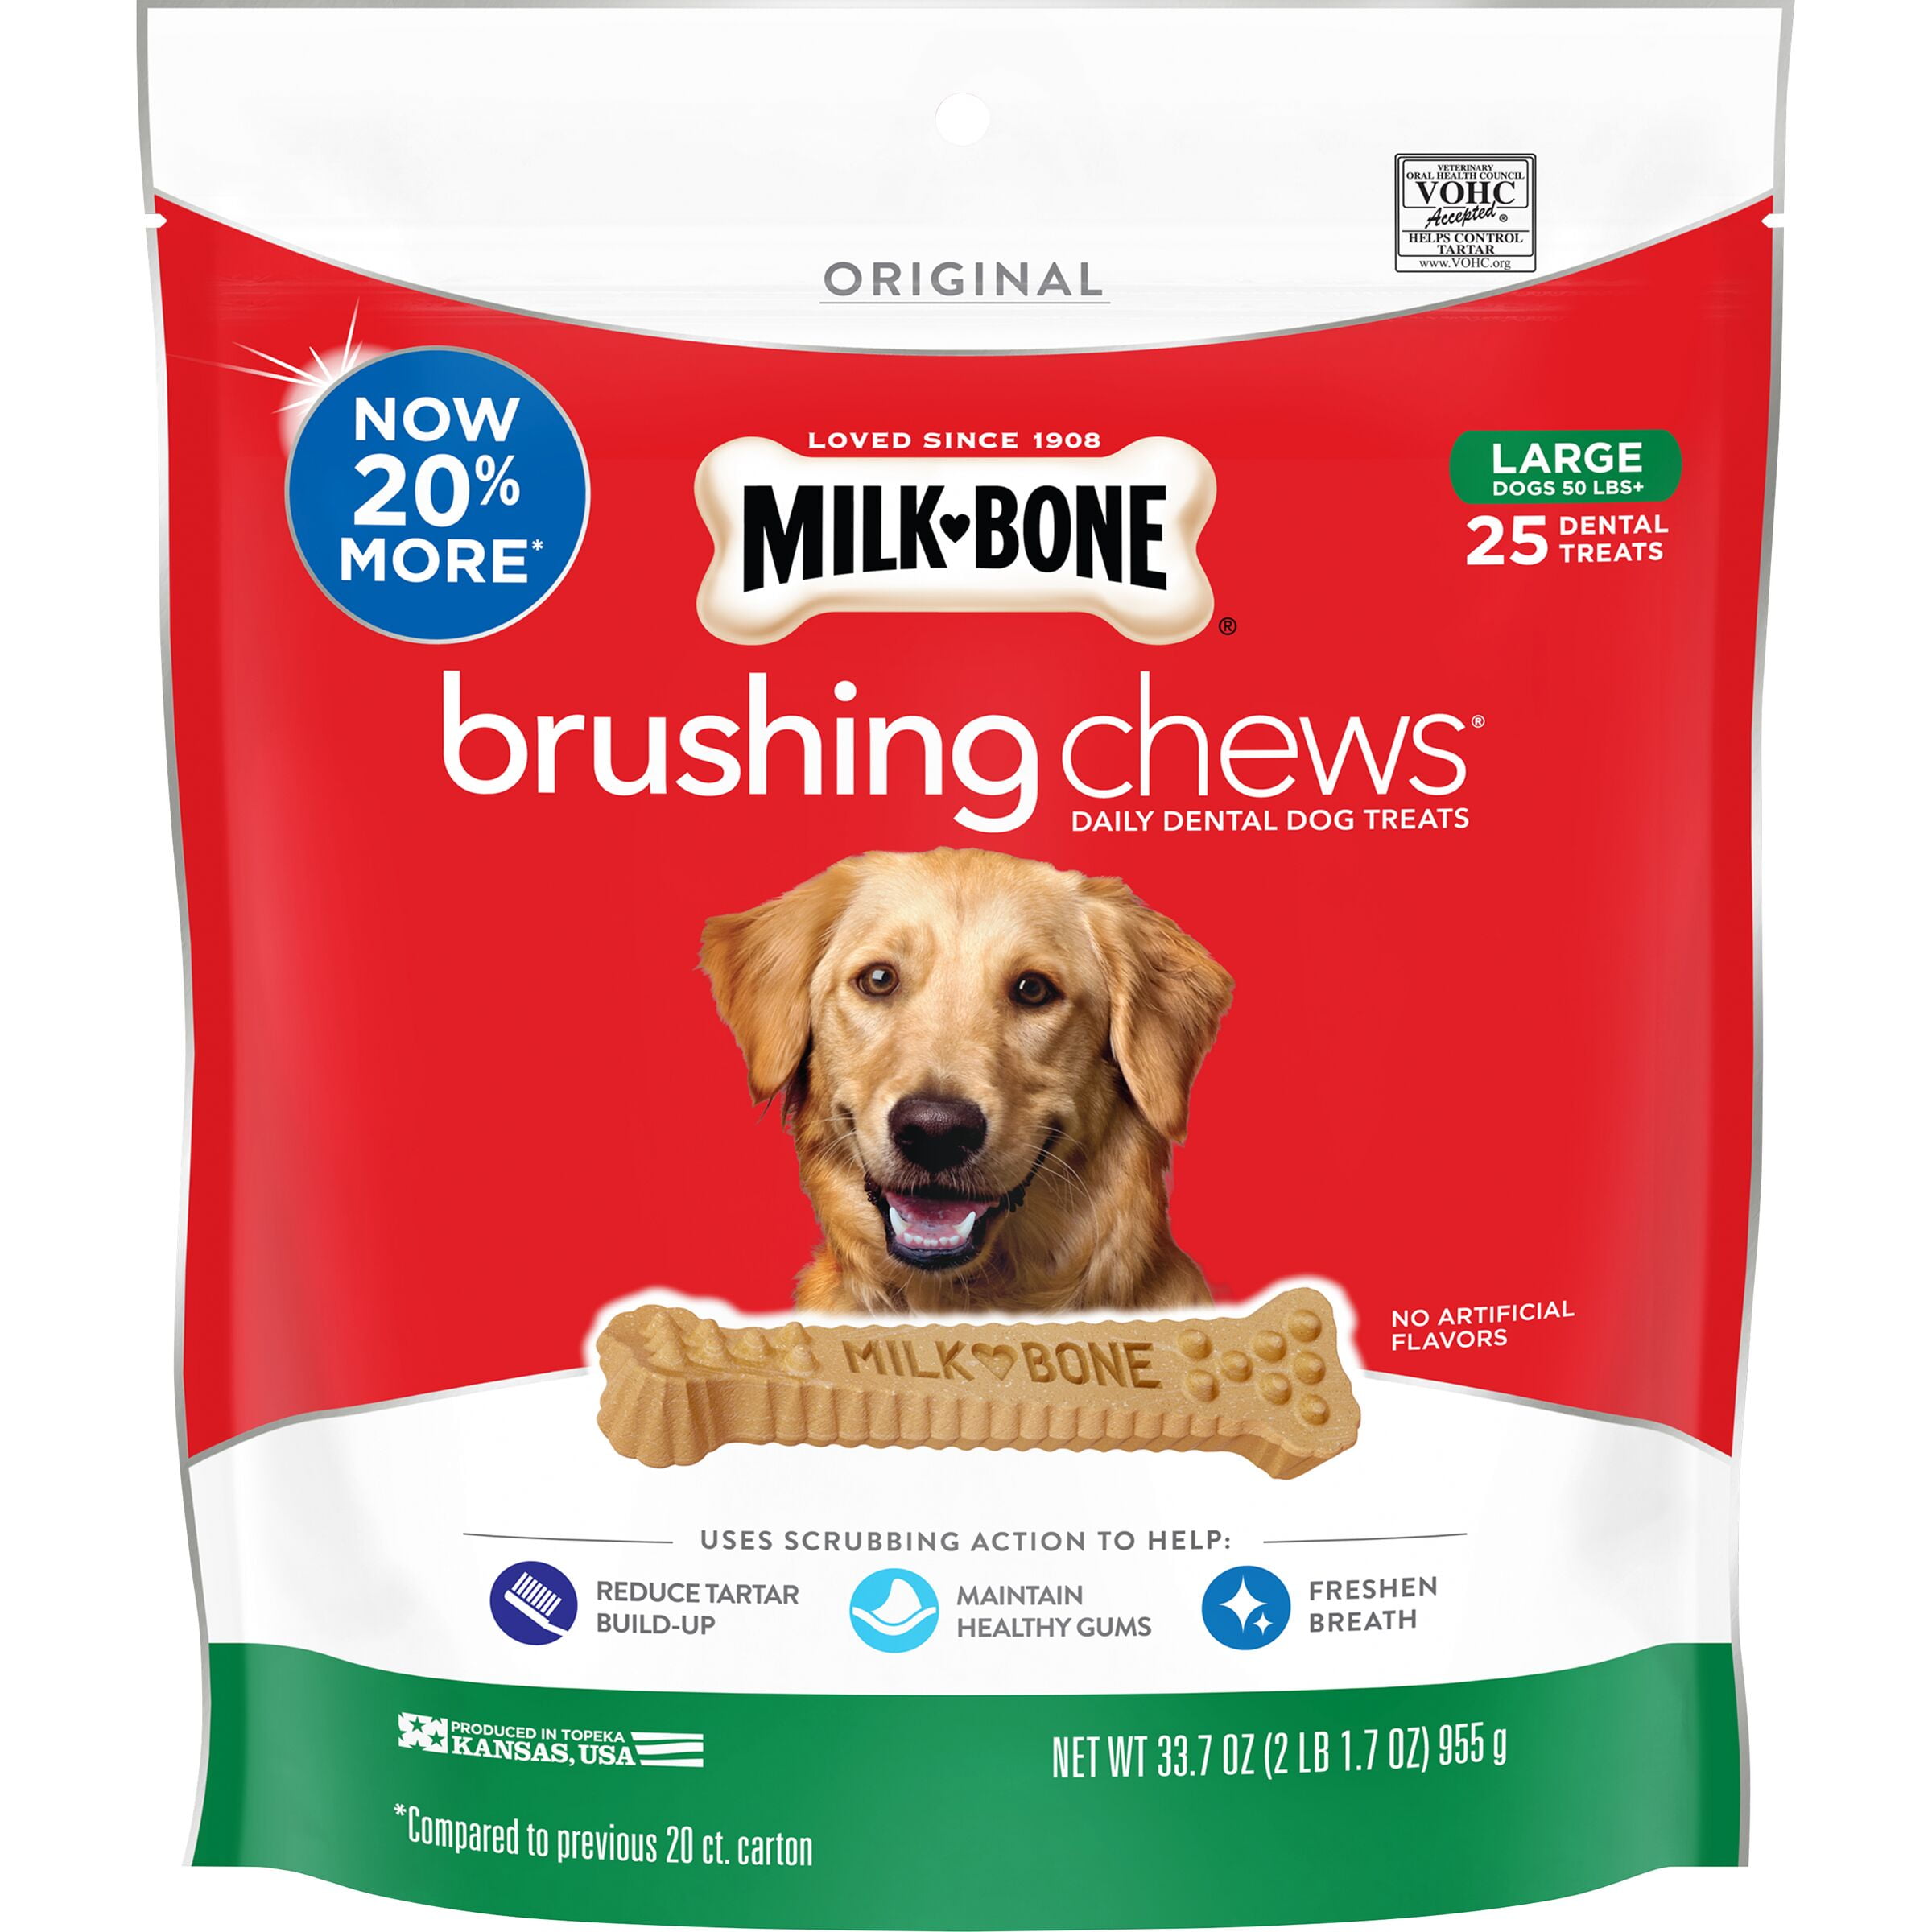 Milk-Bone Brushing Chews Daily Dental Dog Treats, Large, 33.7 oz., 25 Bones Per Bag